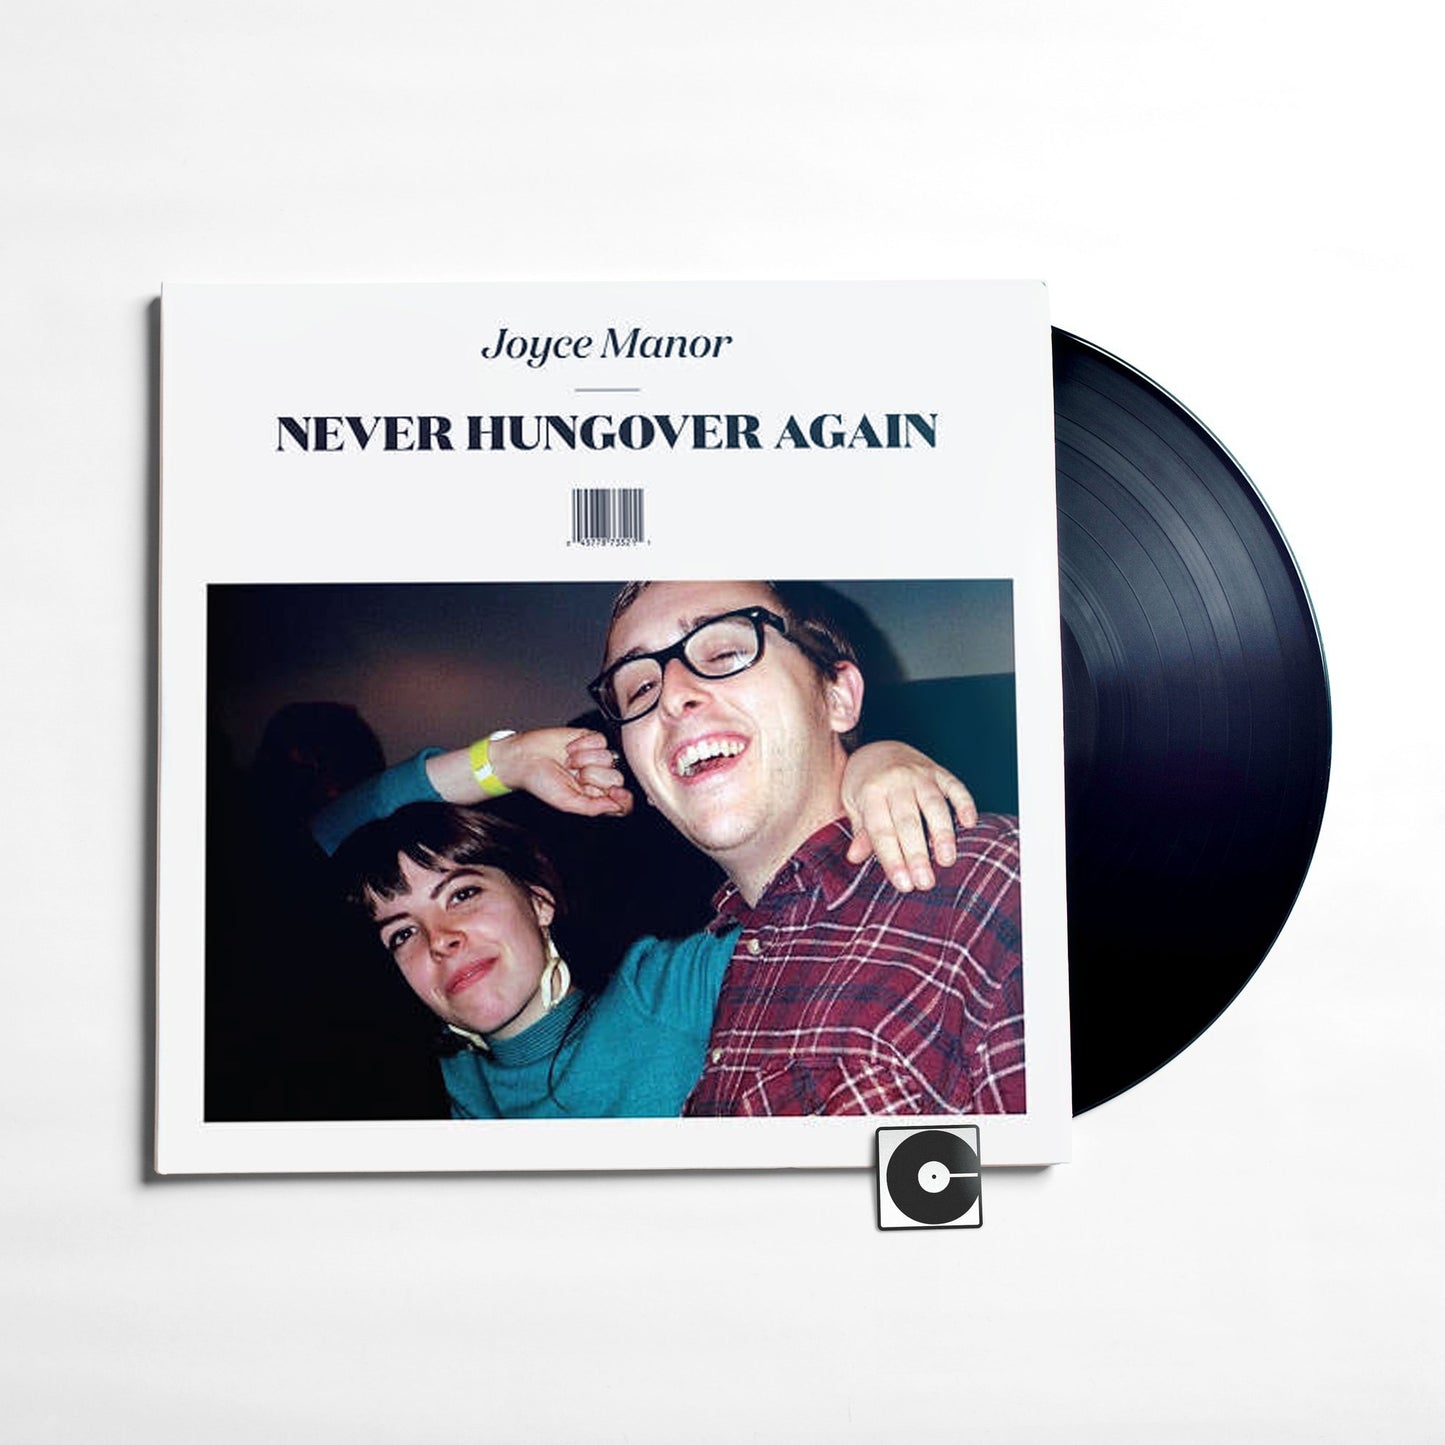 Joyce Manor ‎- "Never Hungover Again"